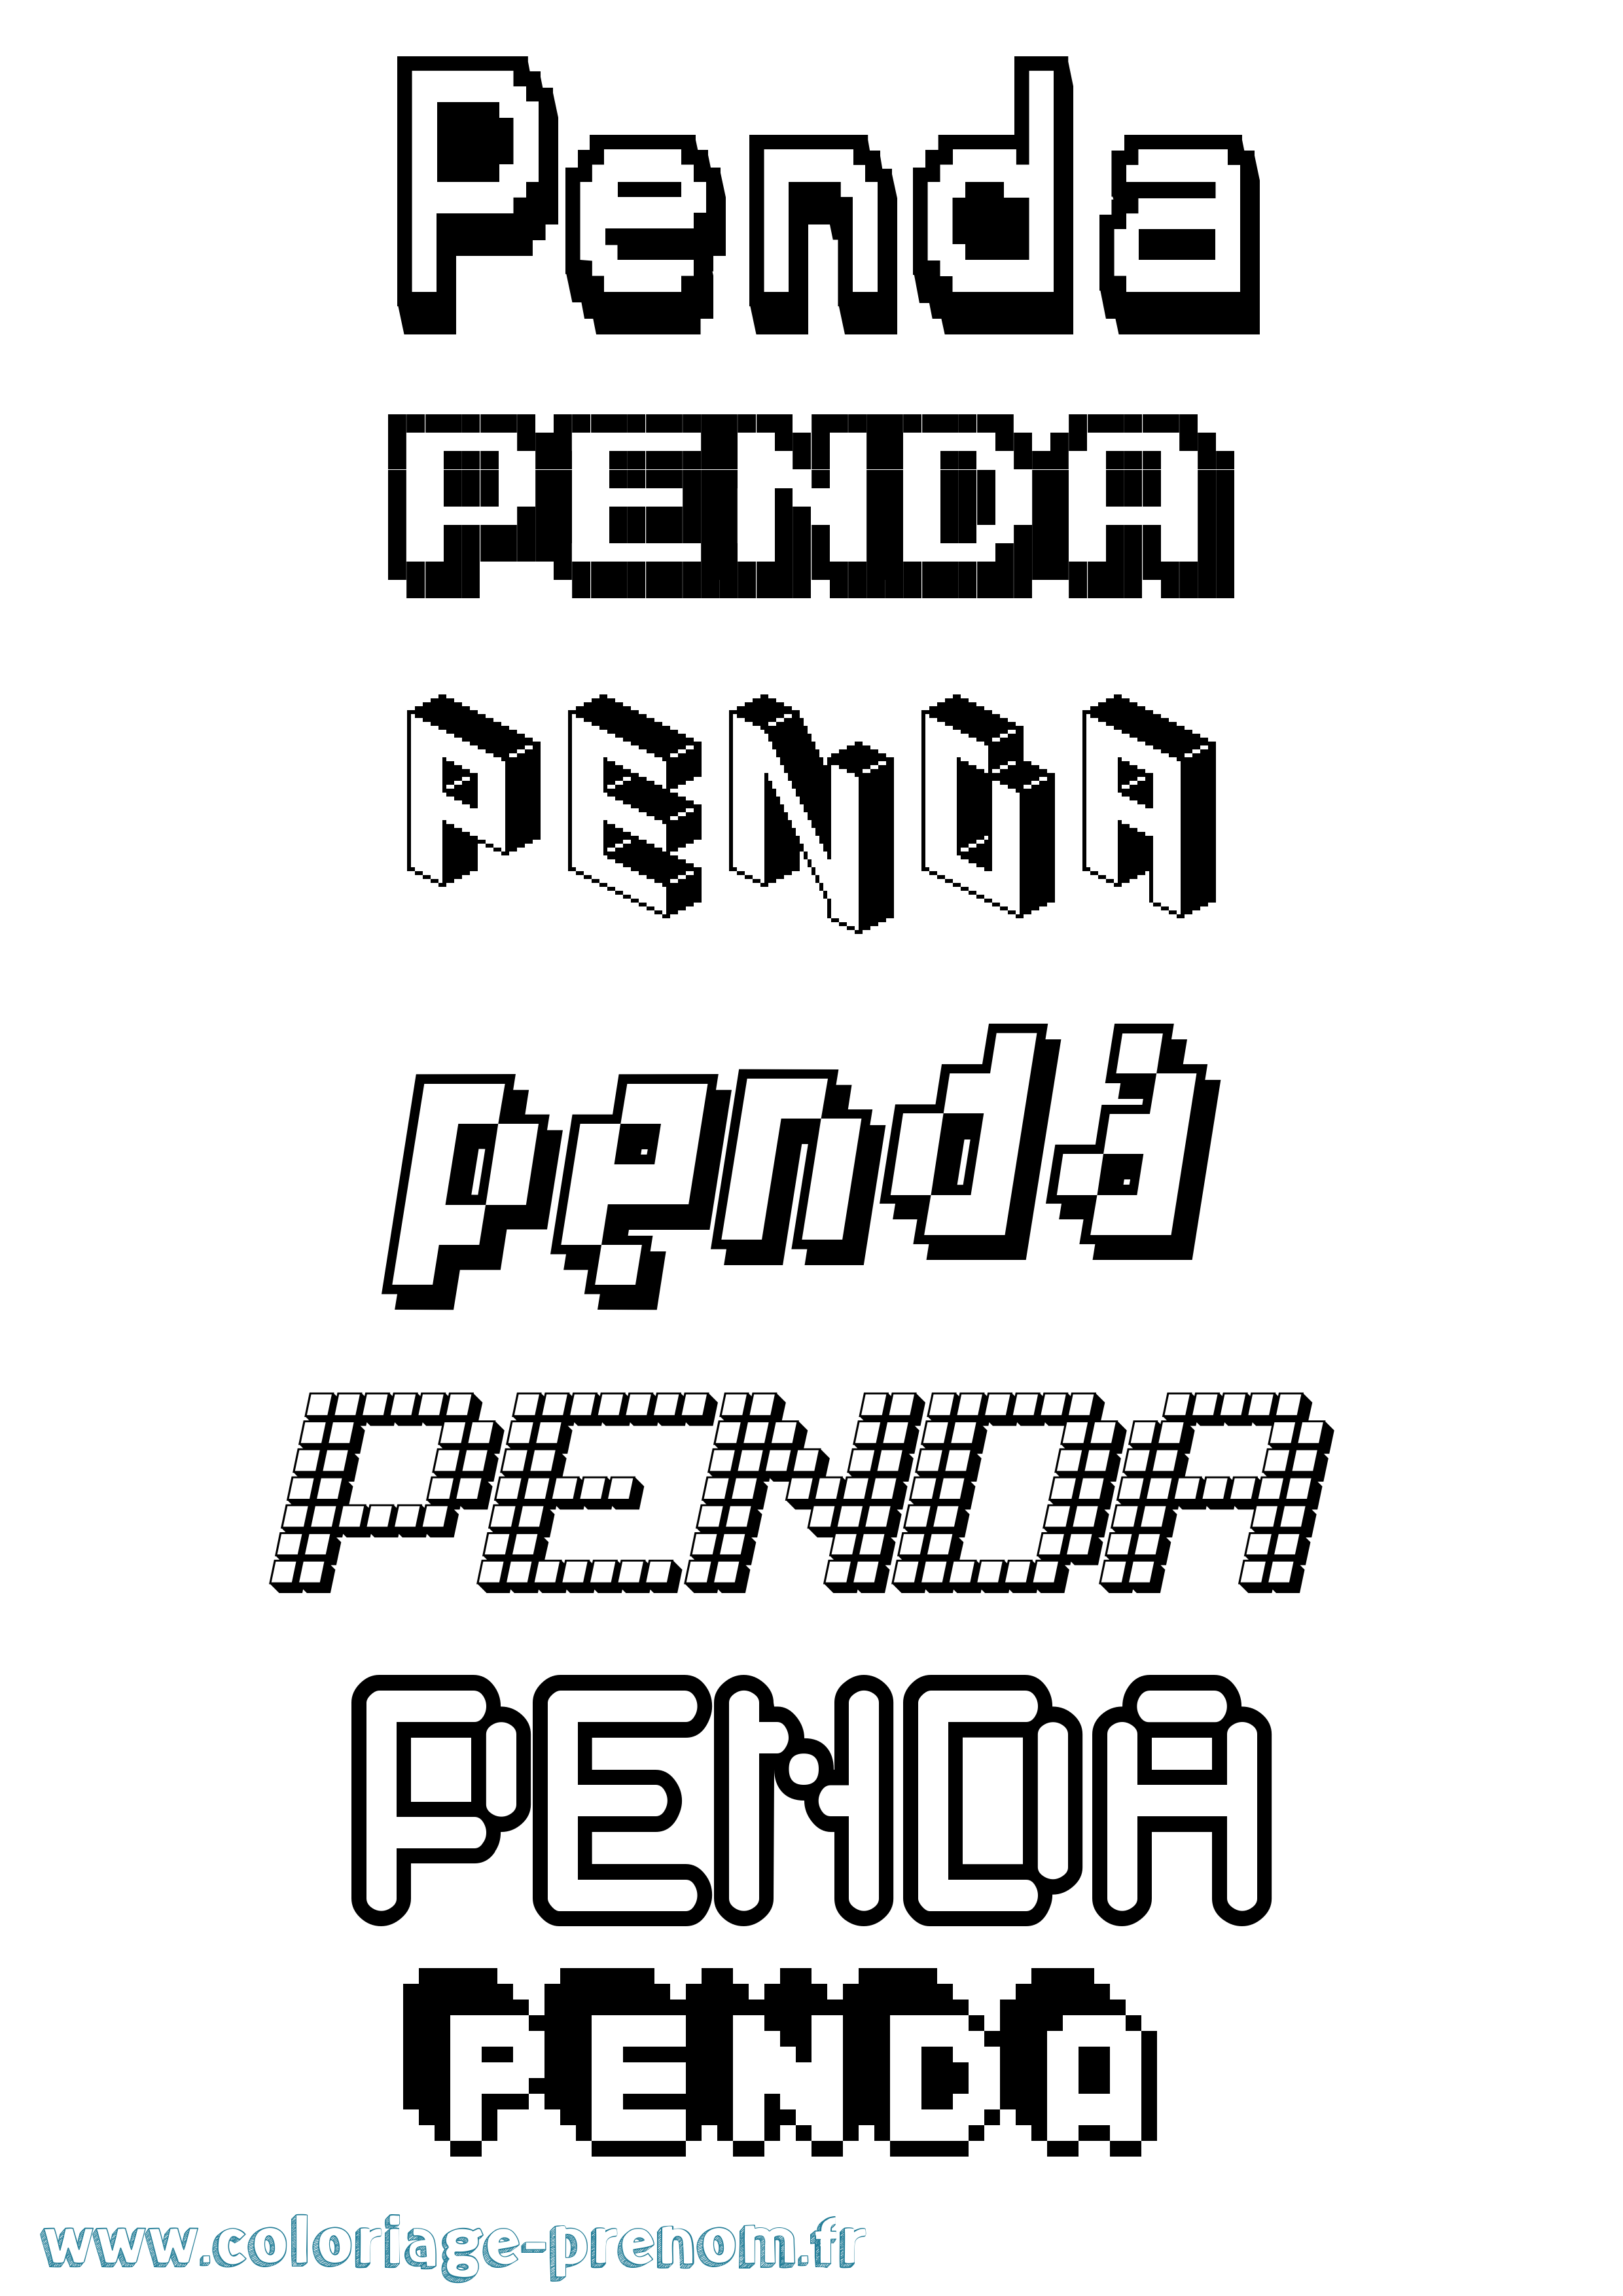 Coloriage prénom Penda